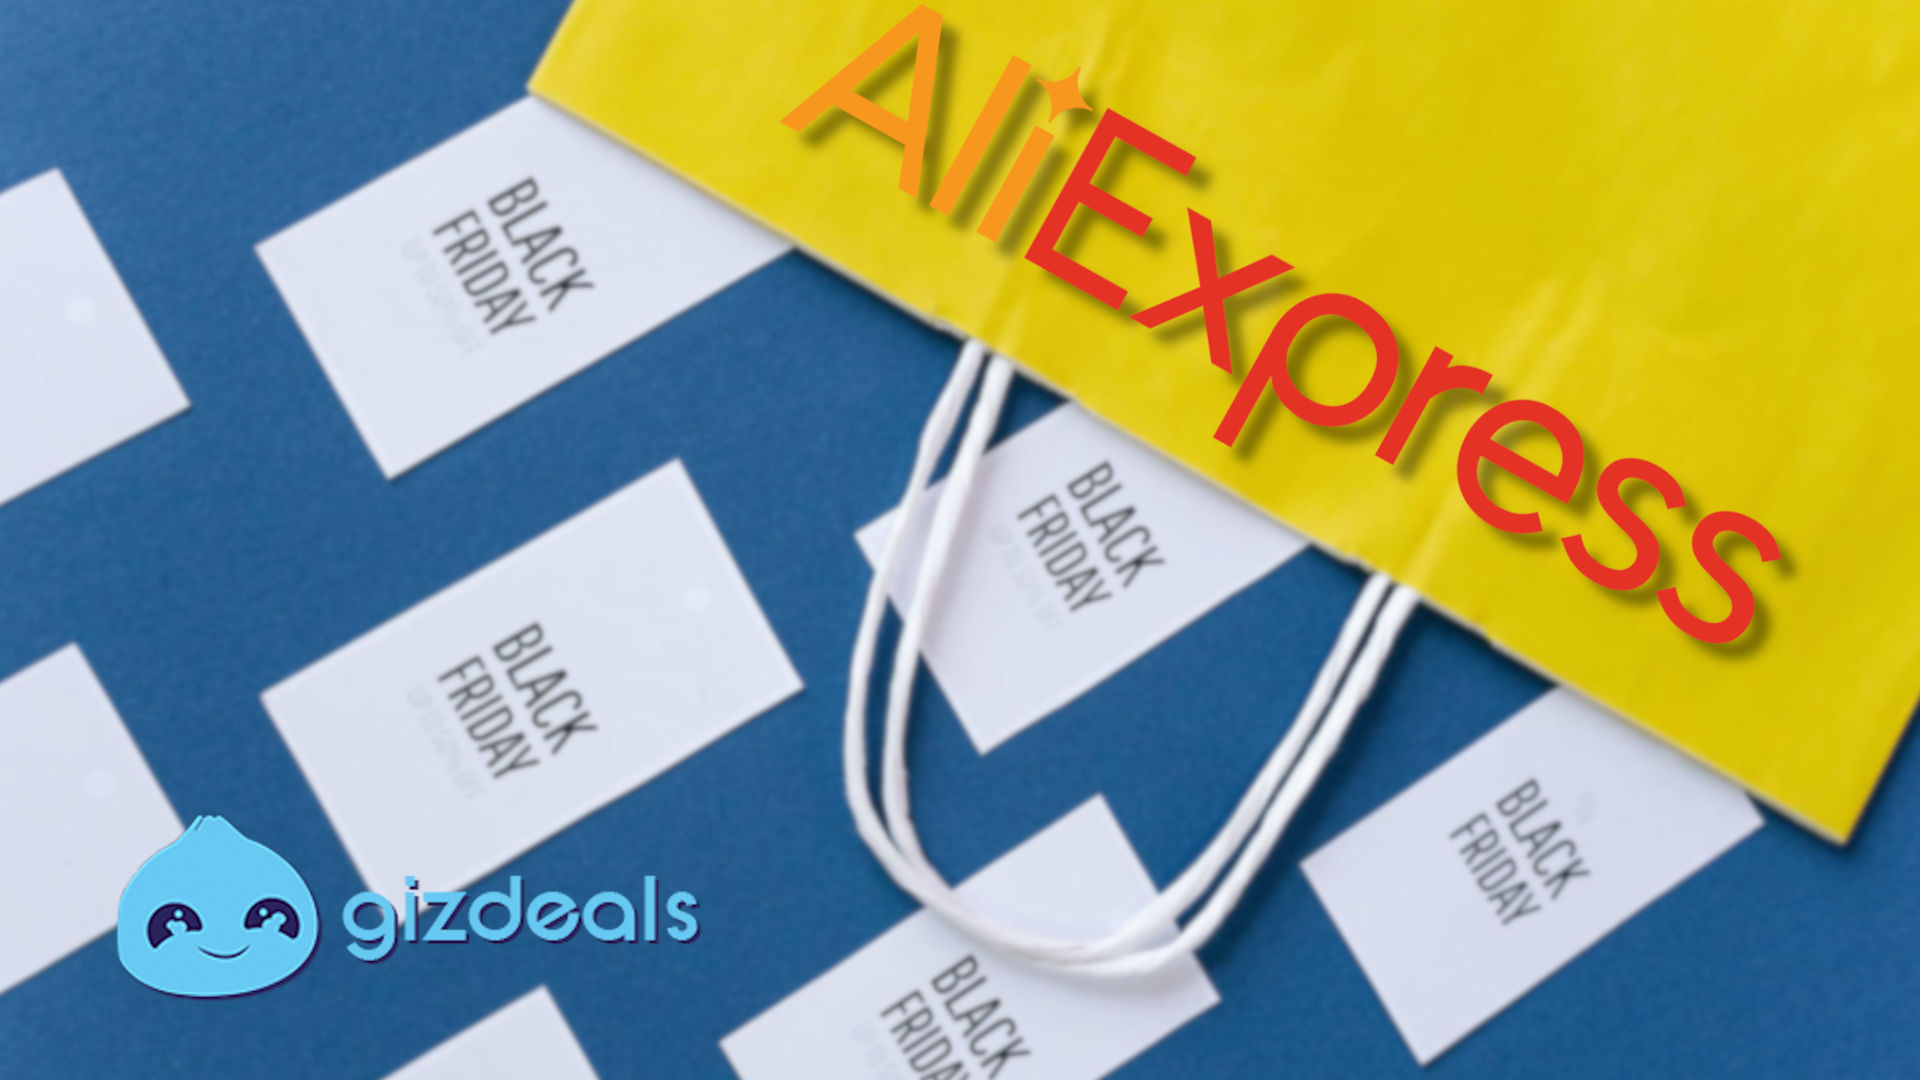 Aliexpress Customer Service Chat